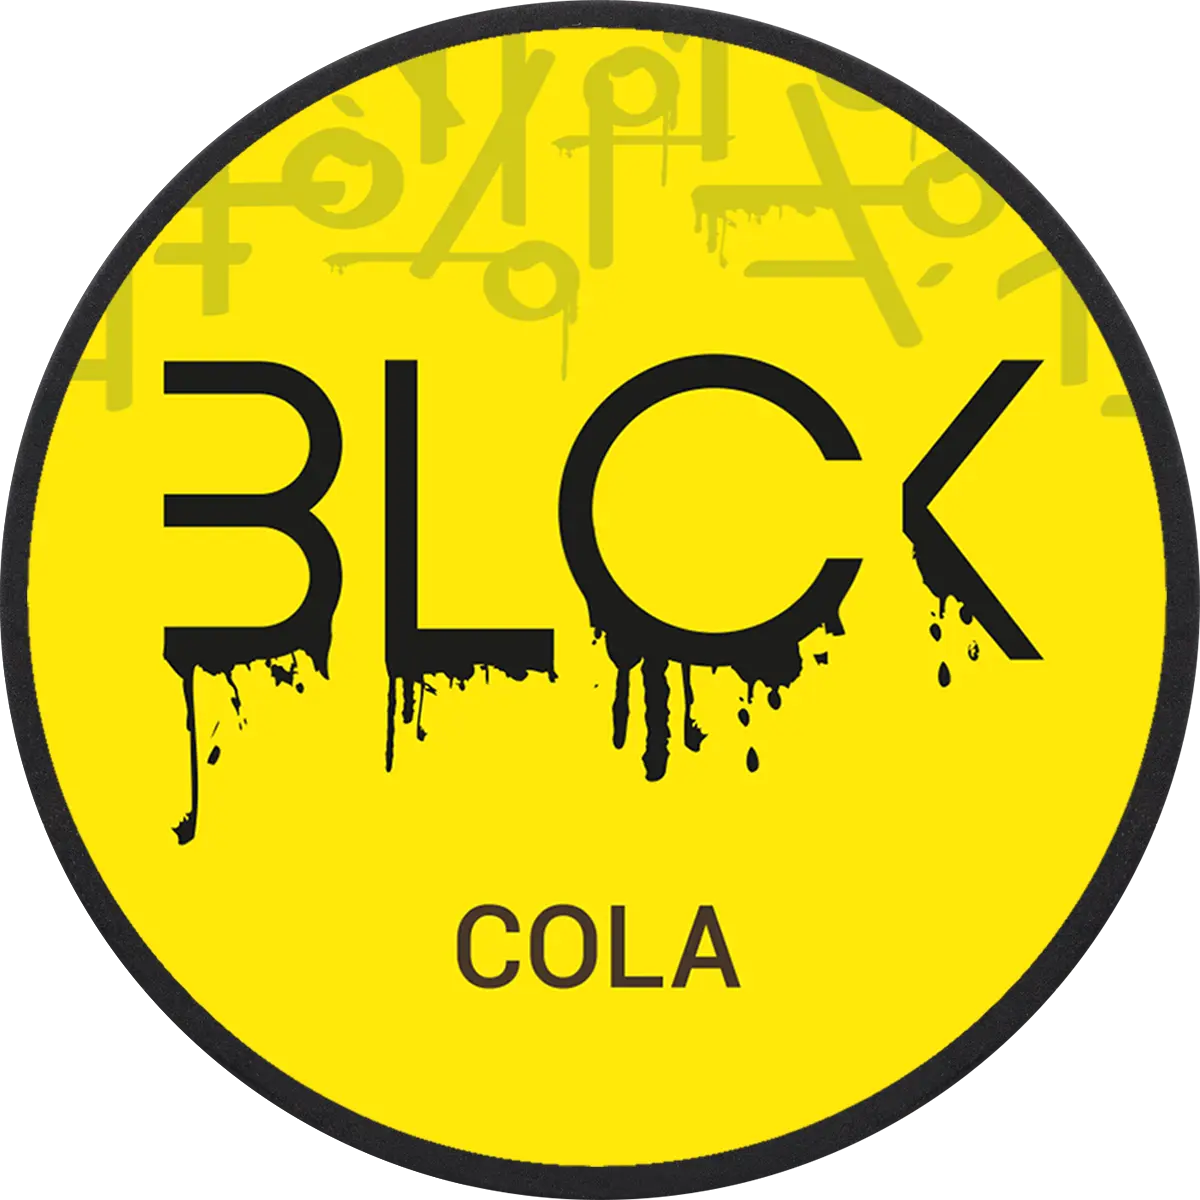 BLCK Cola 16g 12mg/g